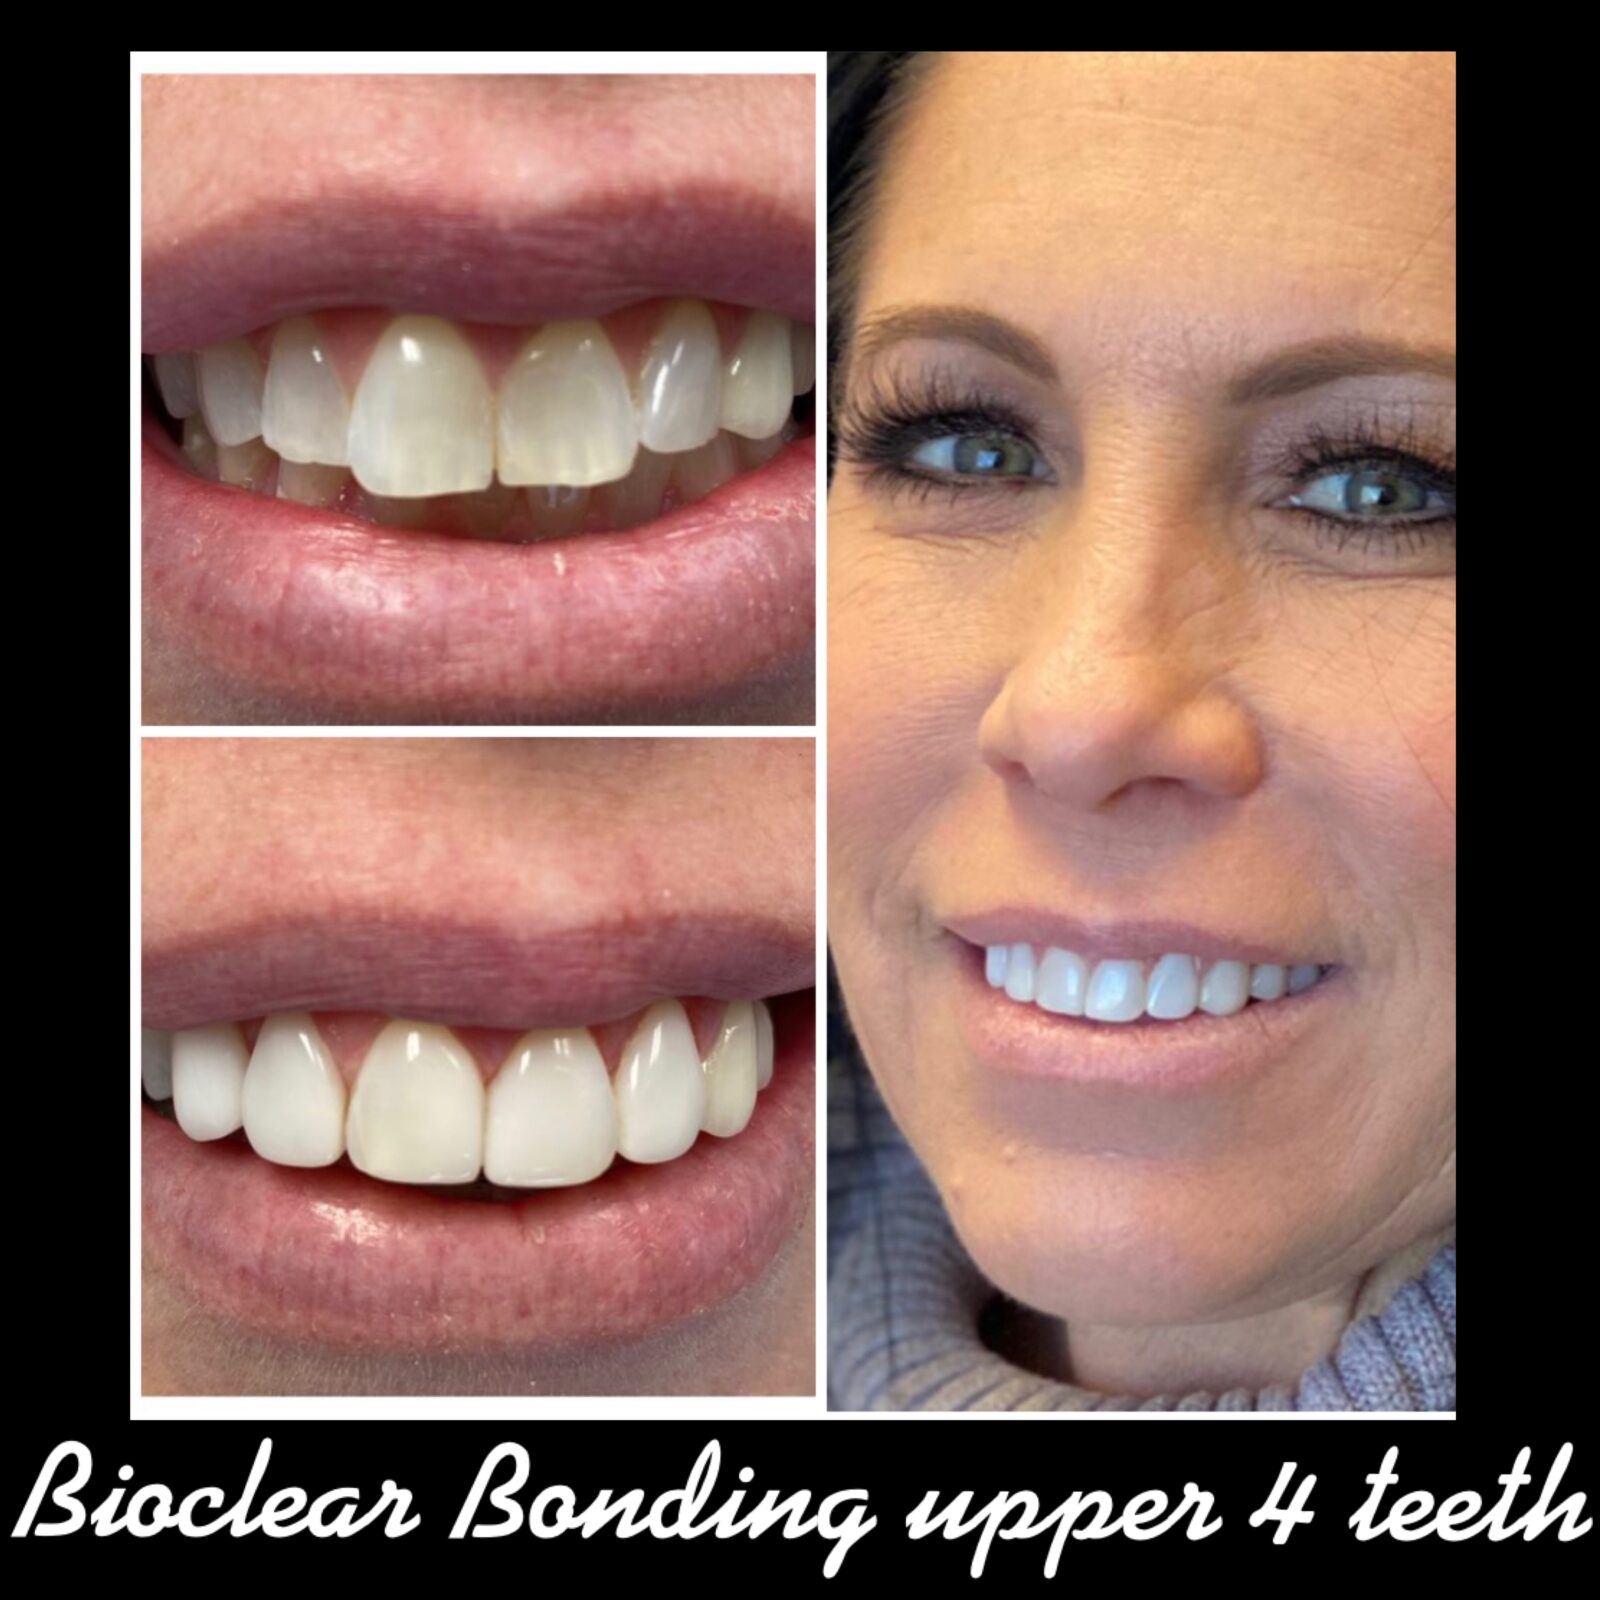 Bioclear Bonding to correct malaligned teeth